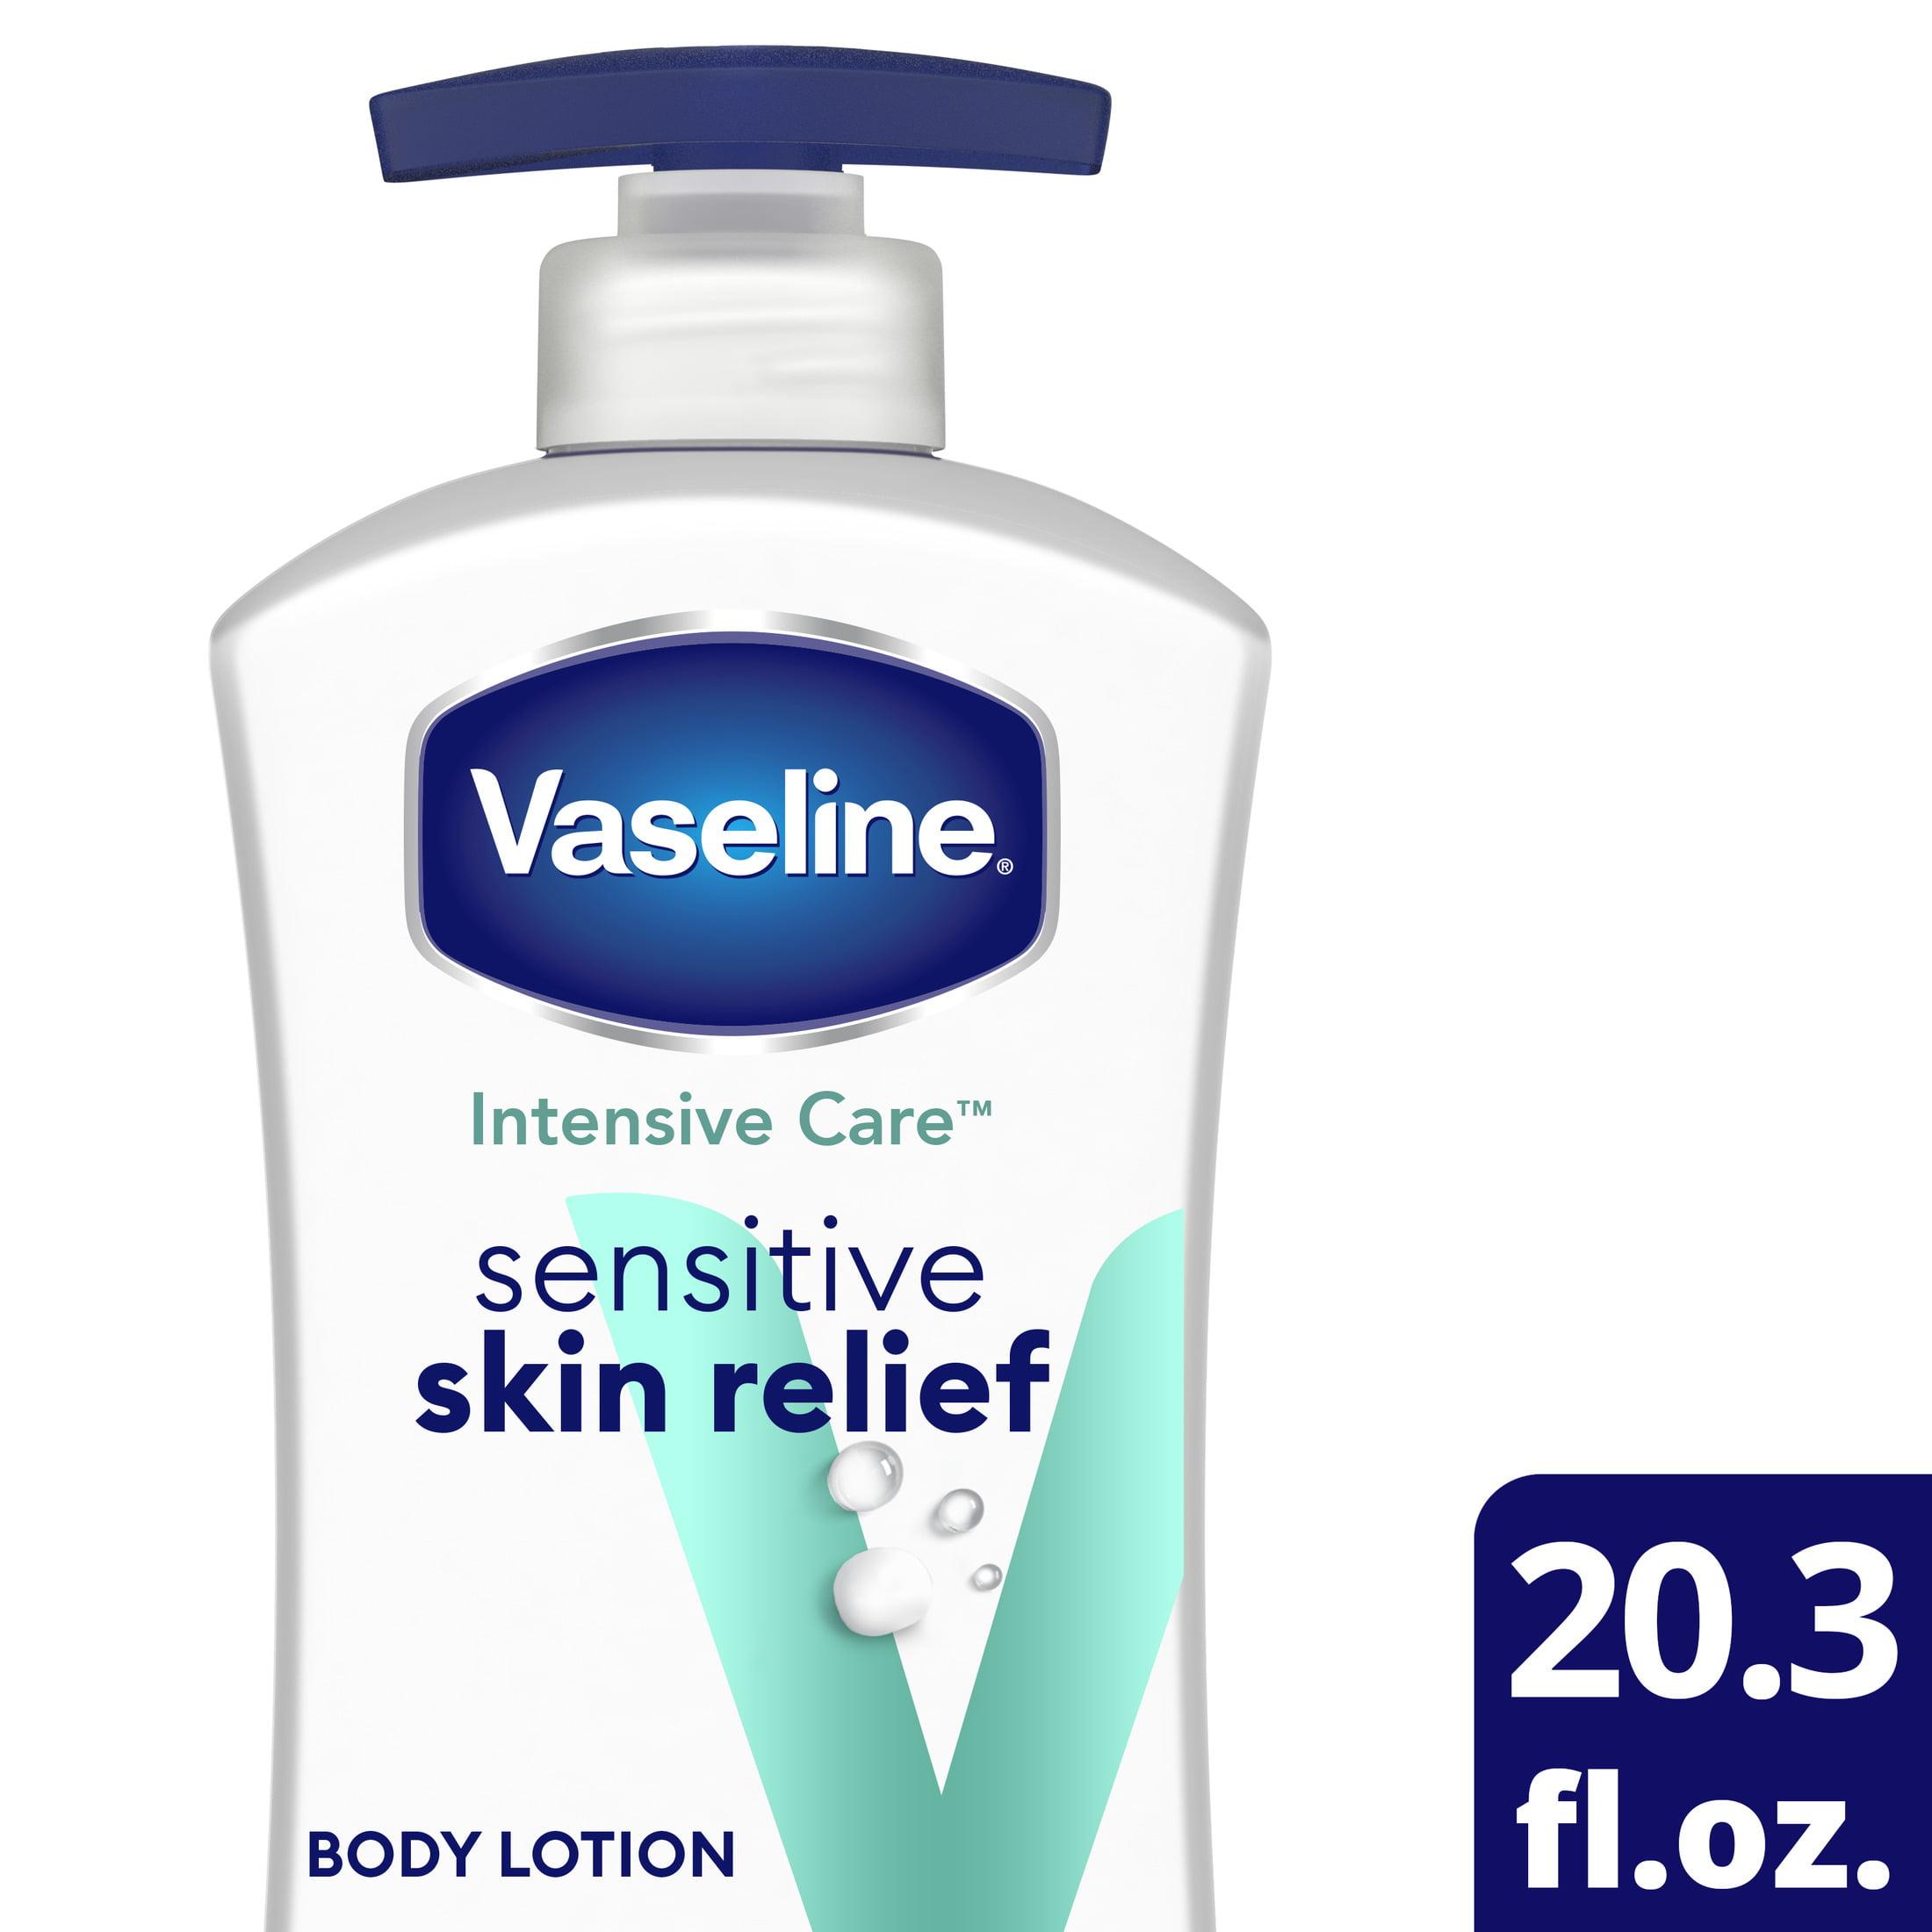 Vaseline Intensive Care Sensitive Skin Relief Non Greasy Body Lotion, 20.3 fl oz - image 3 of 13